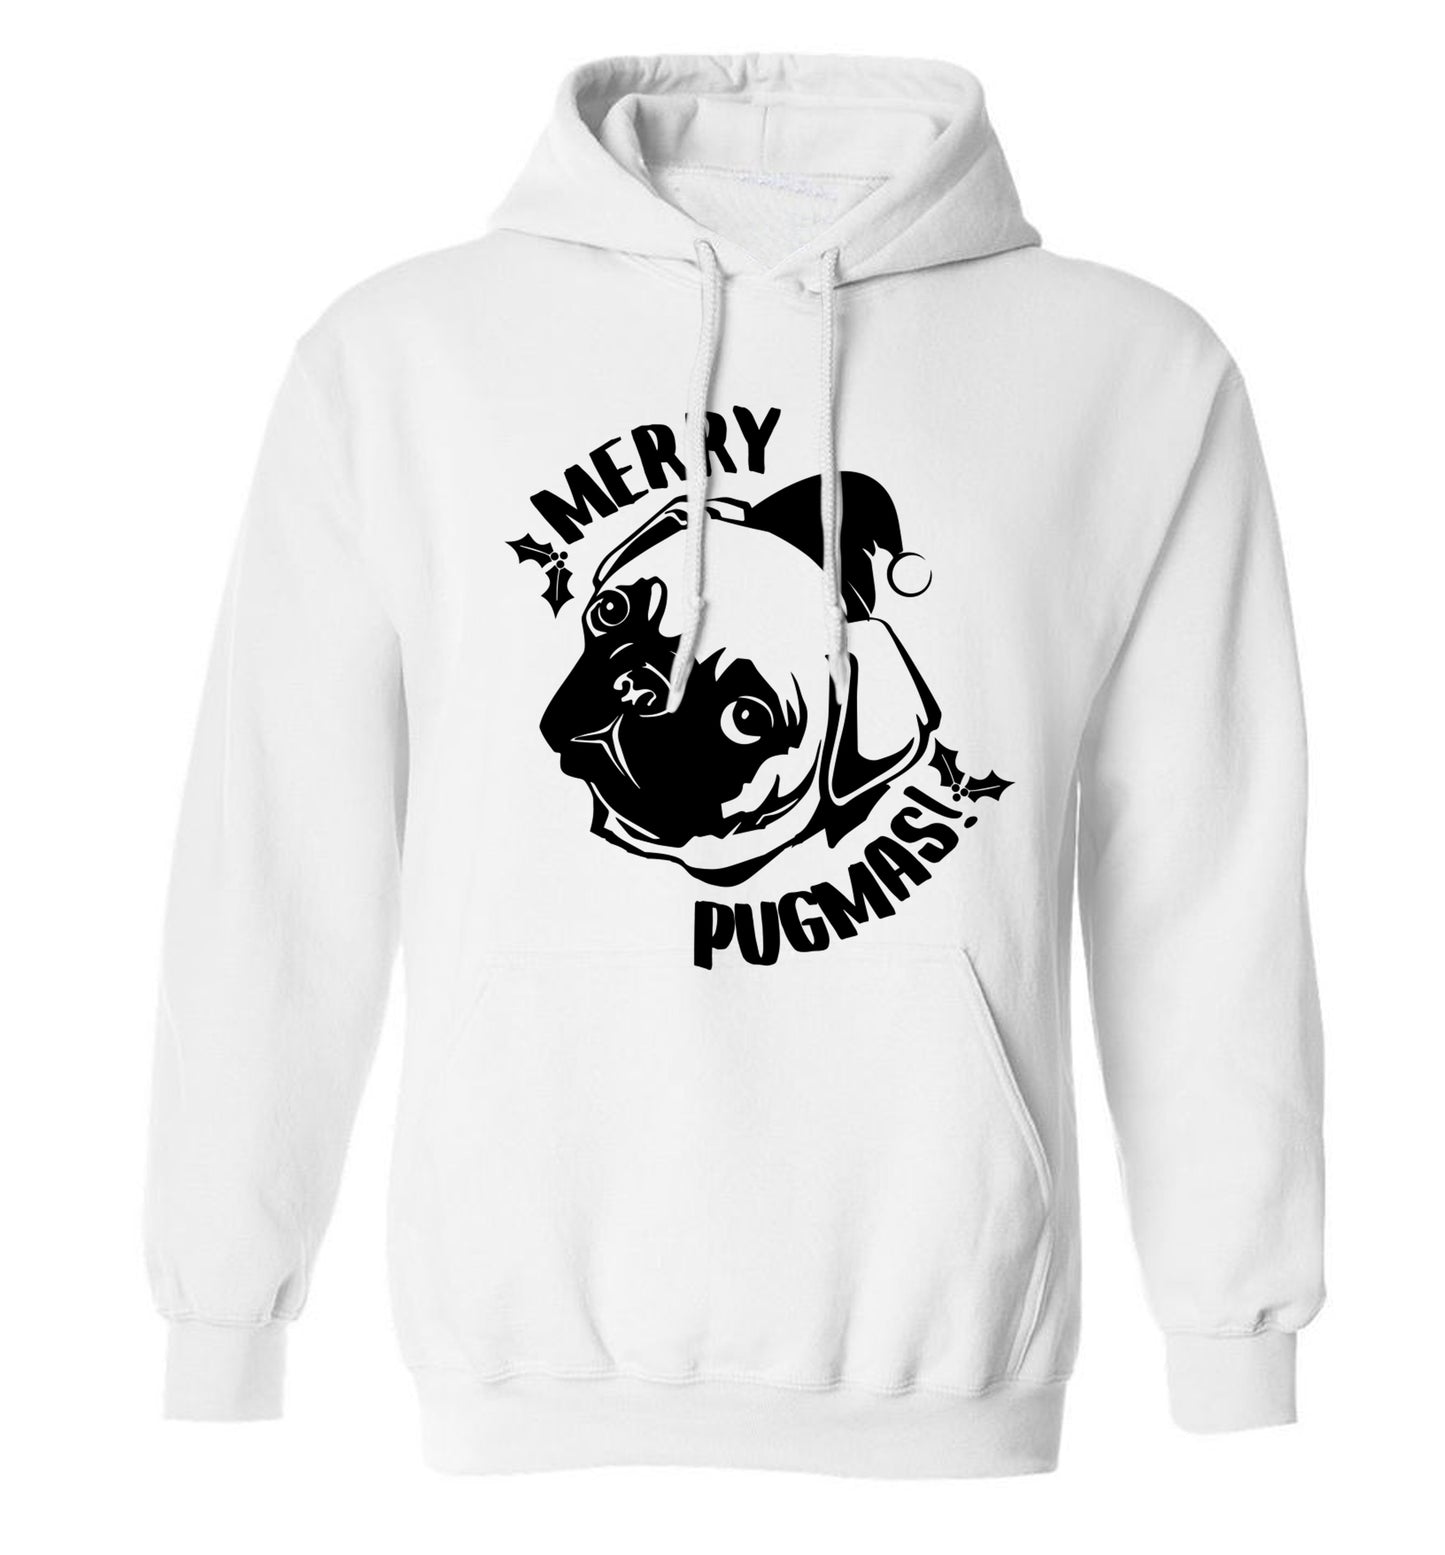 Merry Pugmas adults unisex white hoodie 2XL